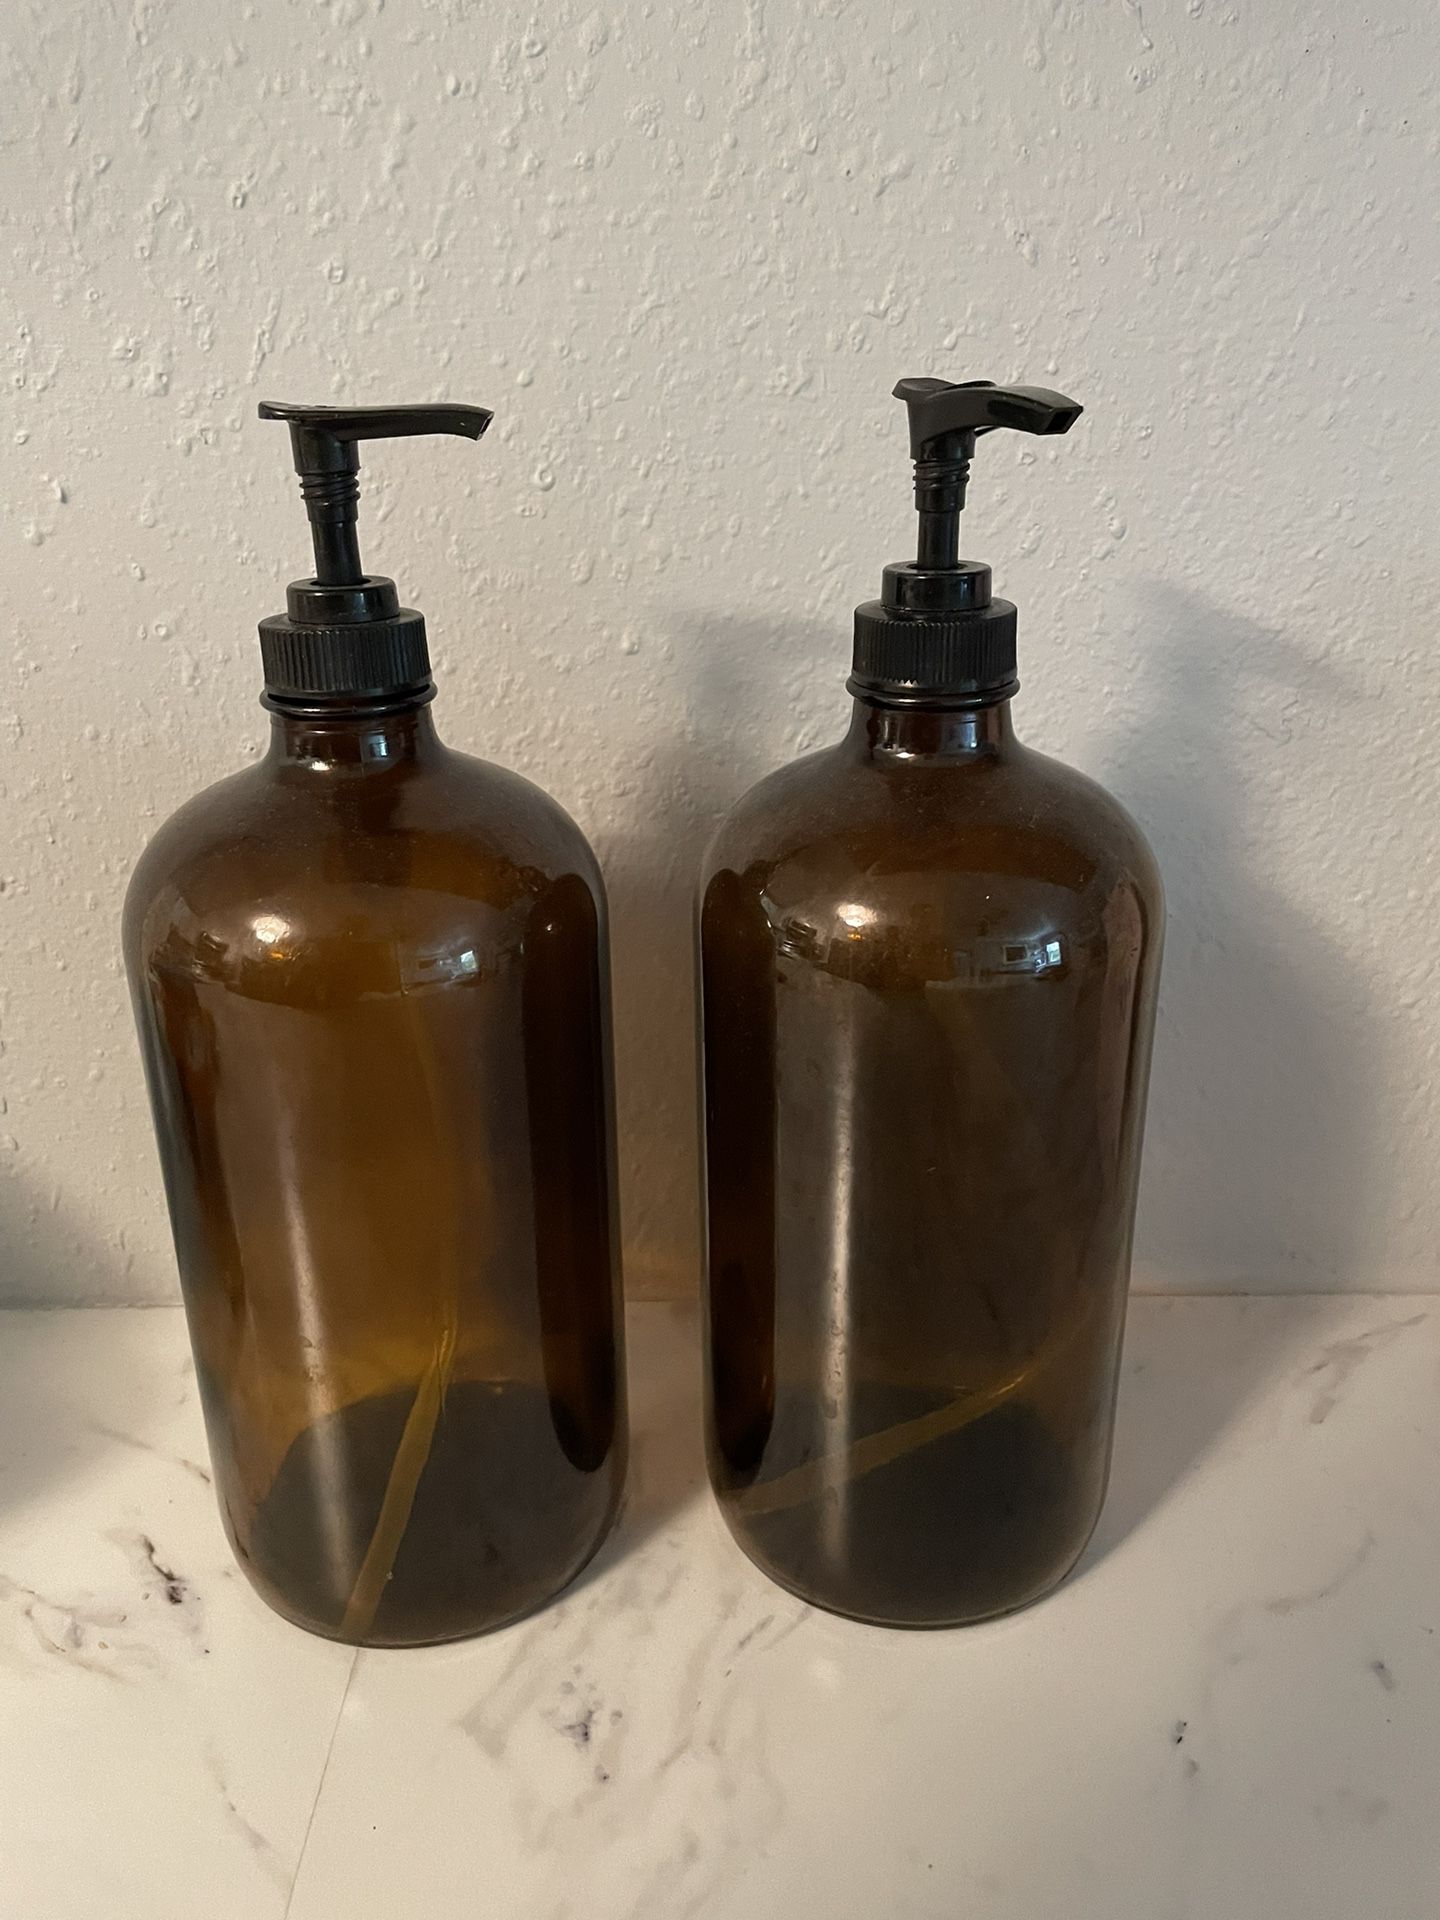 2 Amber Glass Bottles w/ Pump Dispensers - Kitchen-Bath-soap-lotion